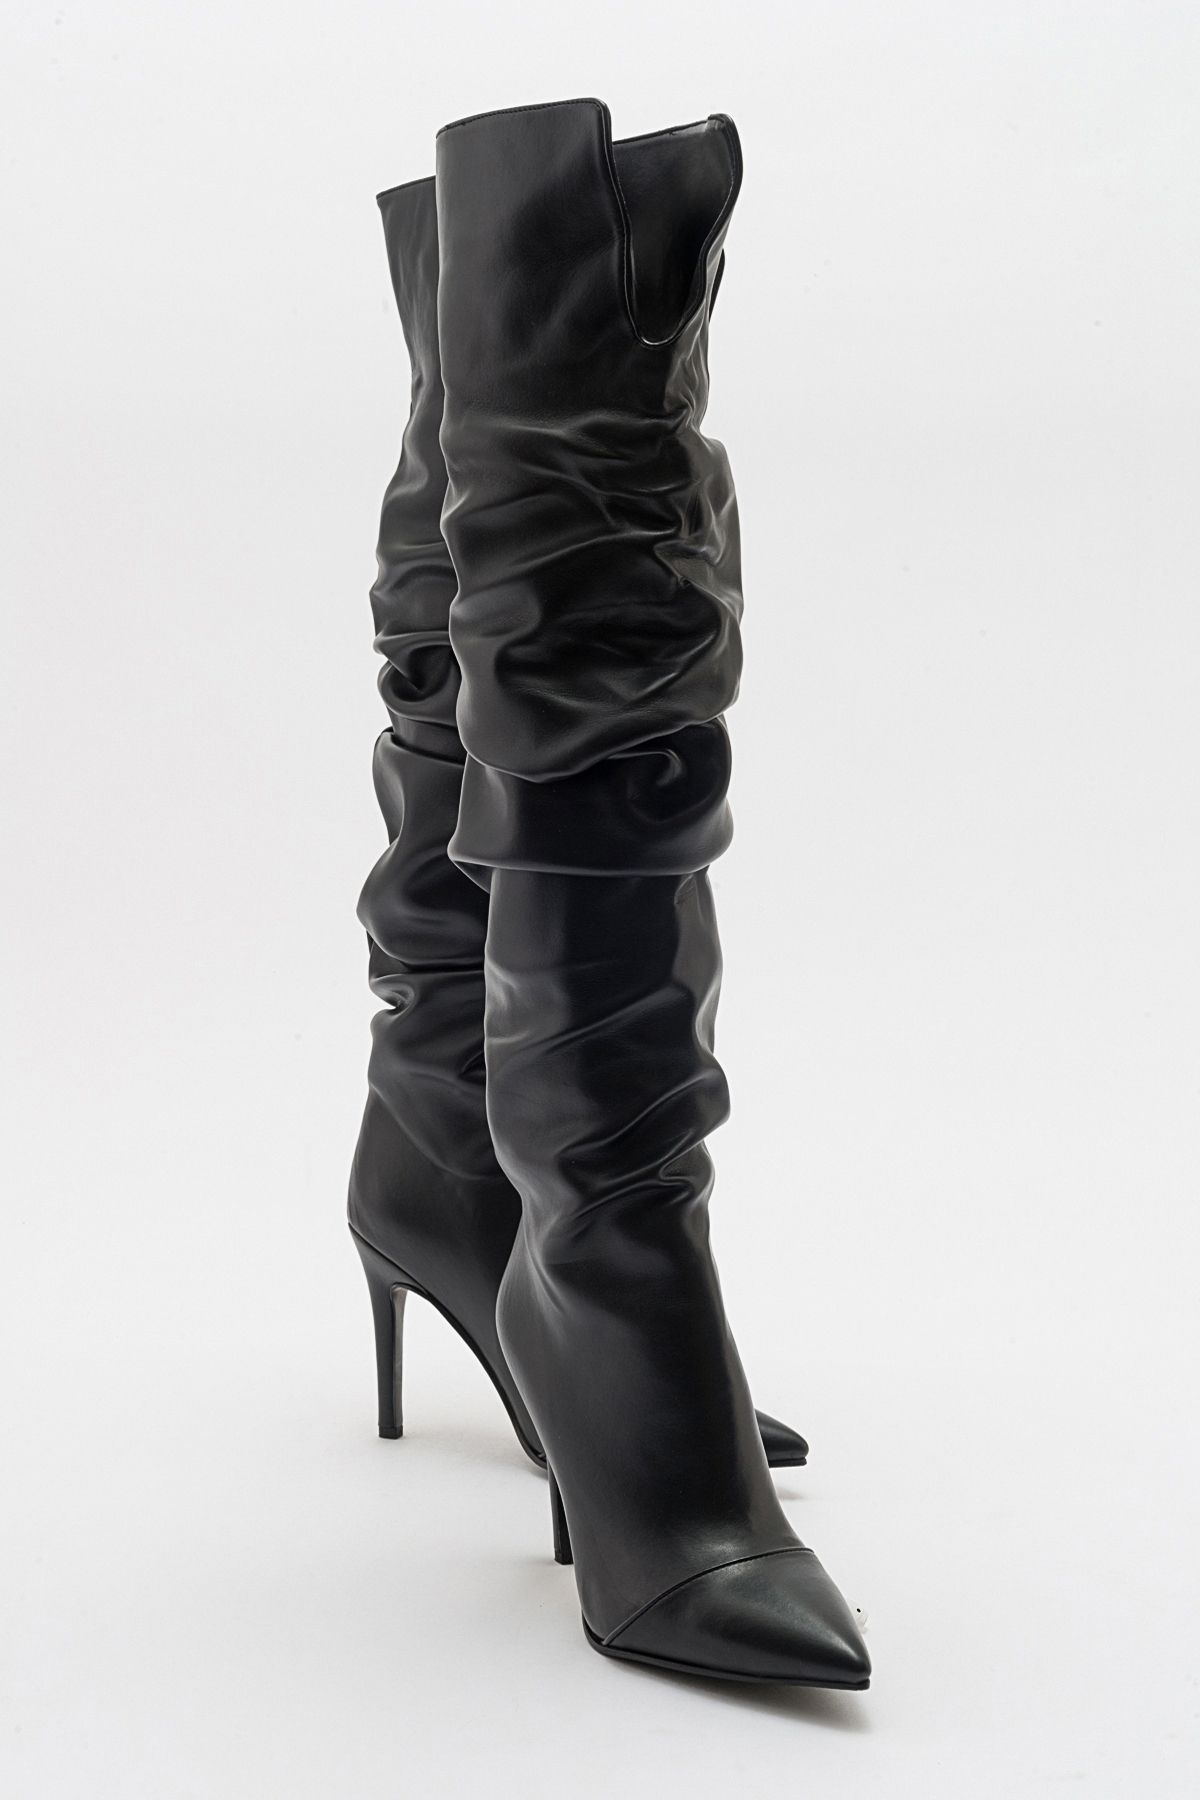 luvishoes POLİNA Siyah Cilt Kadın Topuklu Çizme